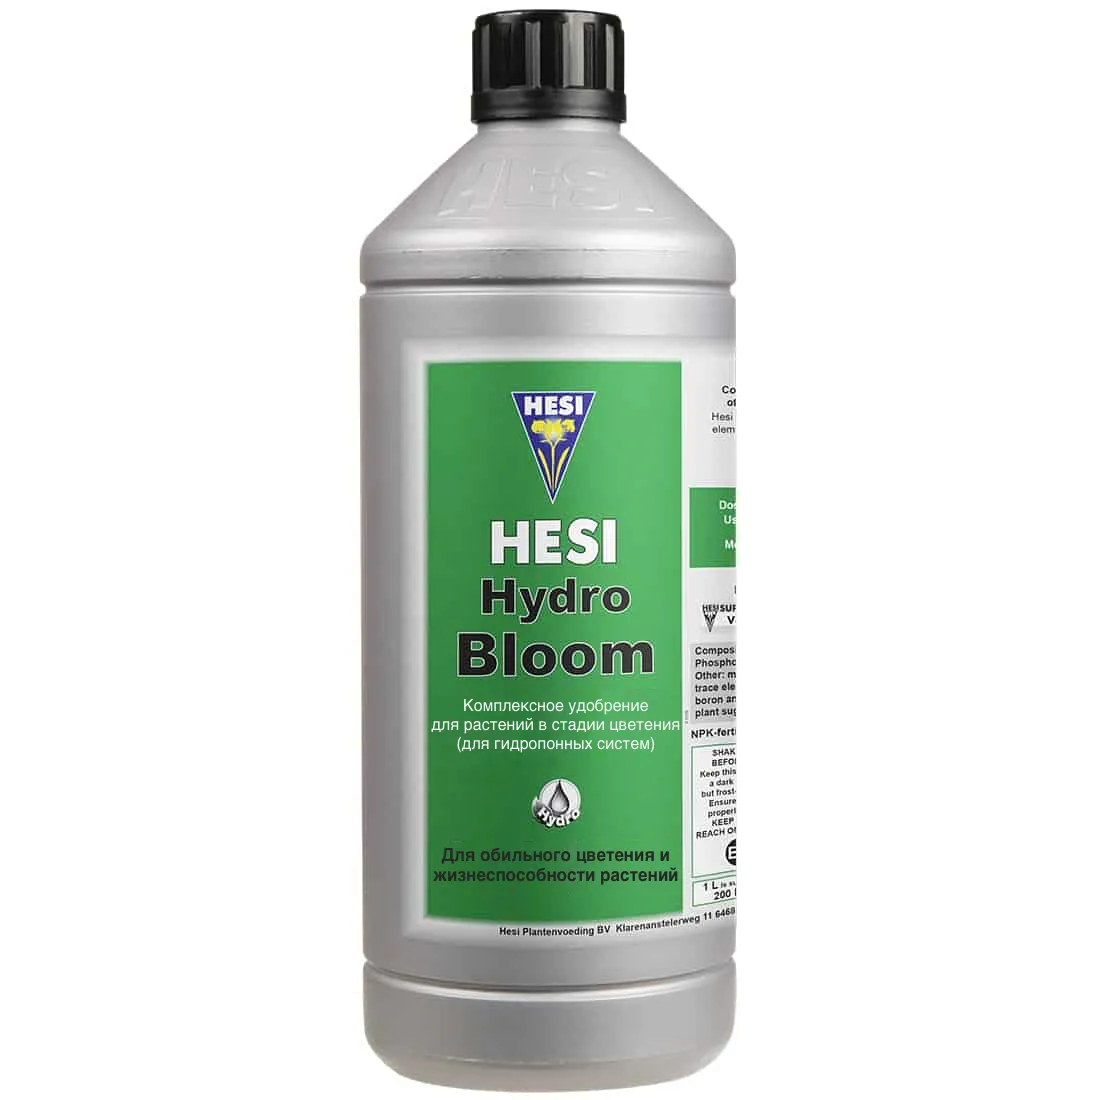 Hesi Hydro Bloom от магазина GrowMix